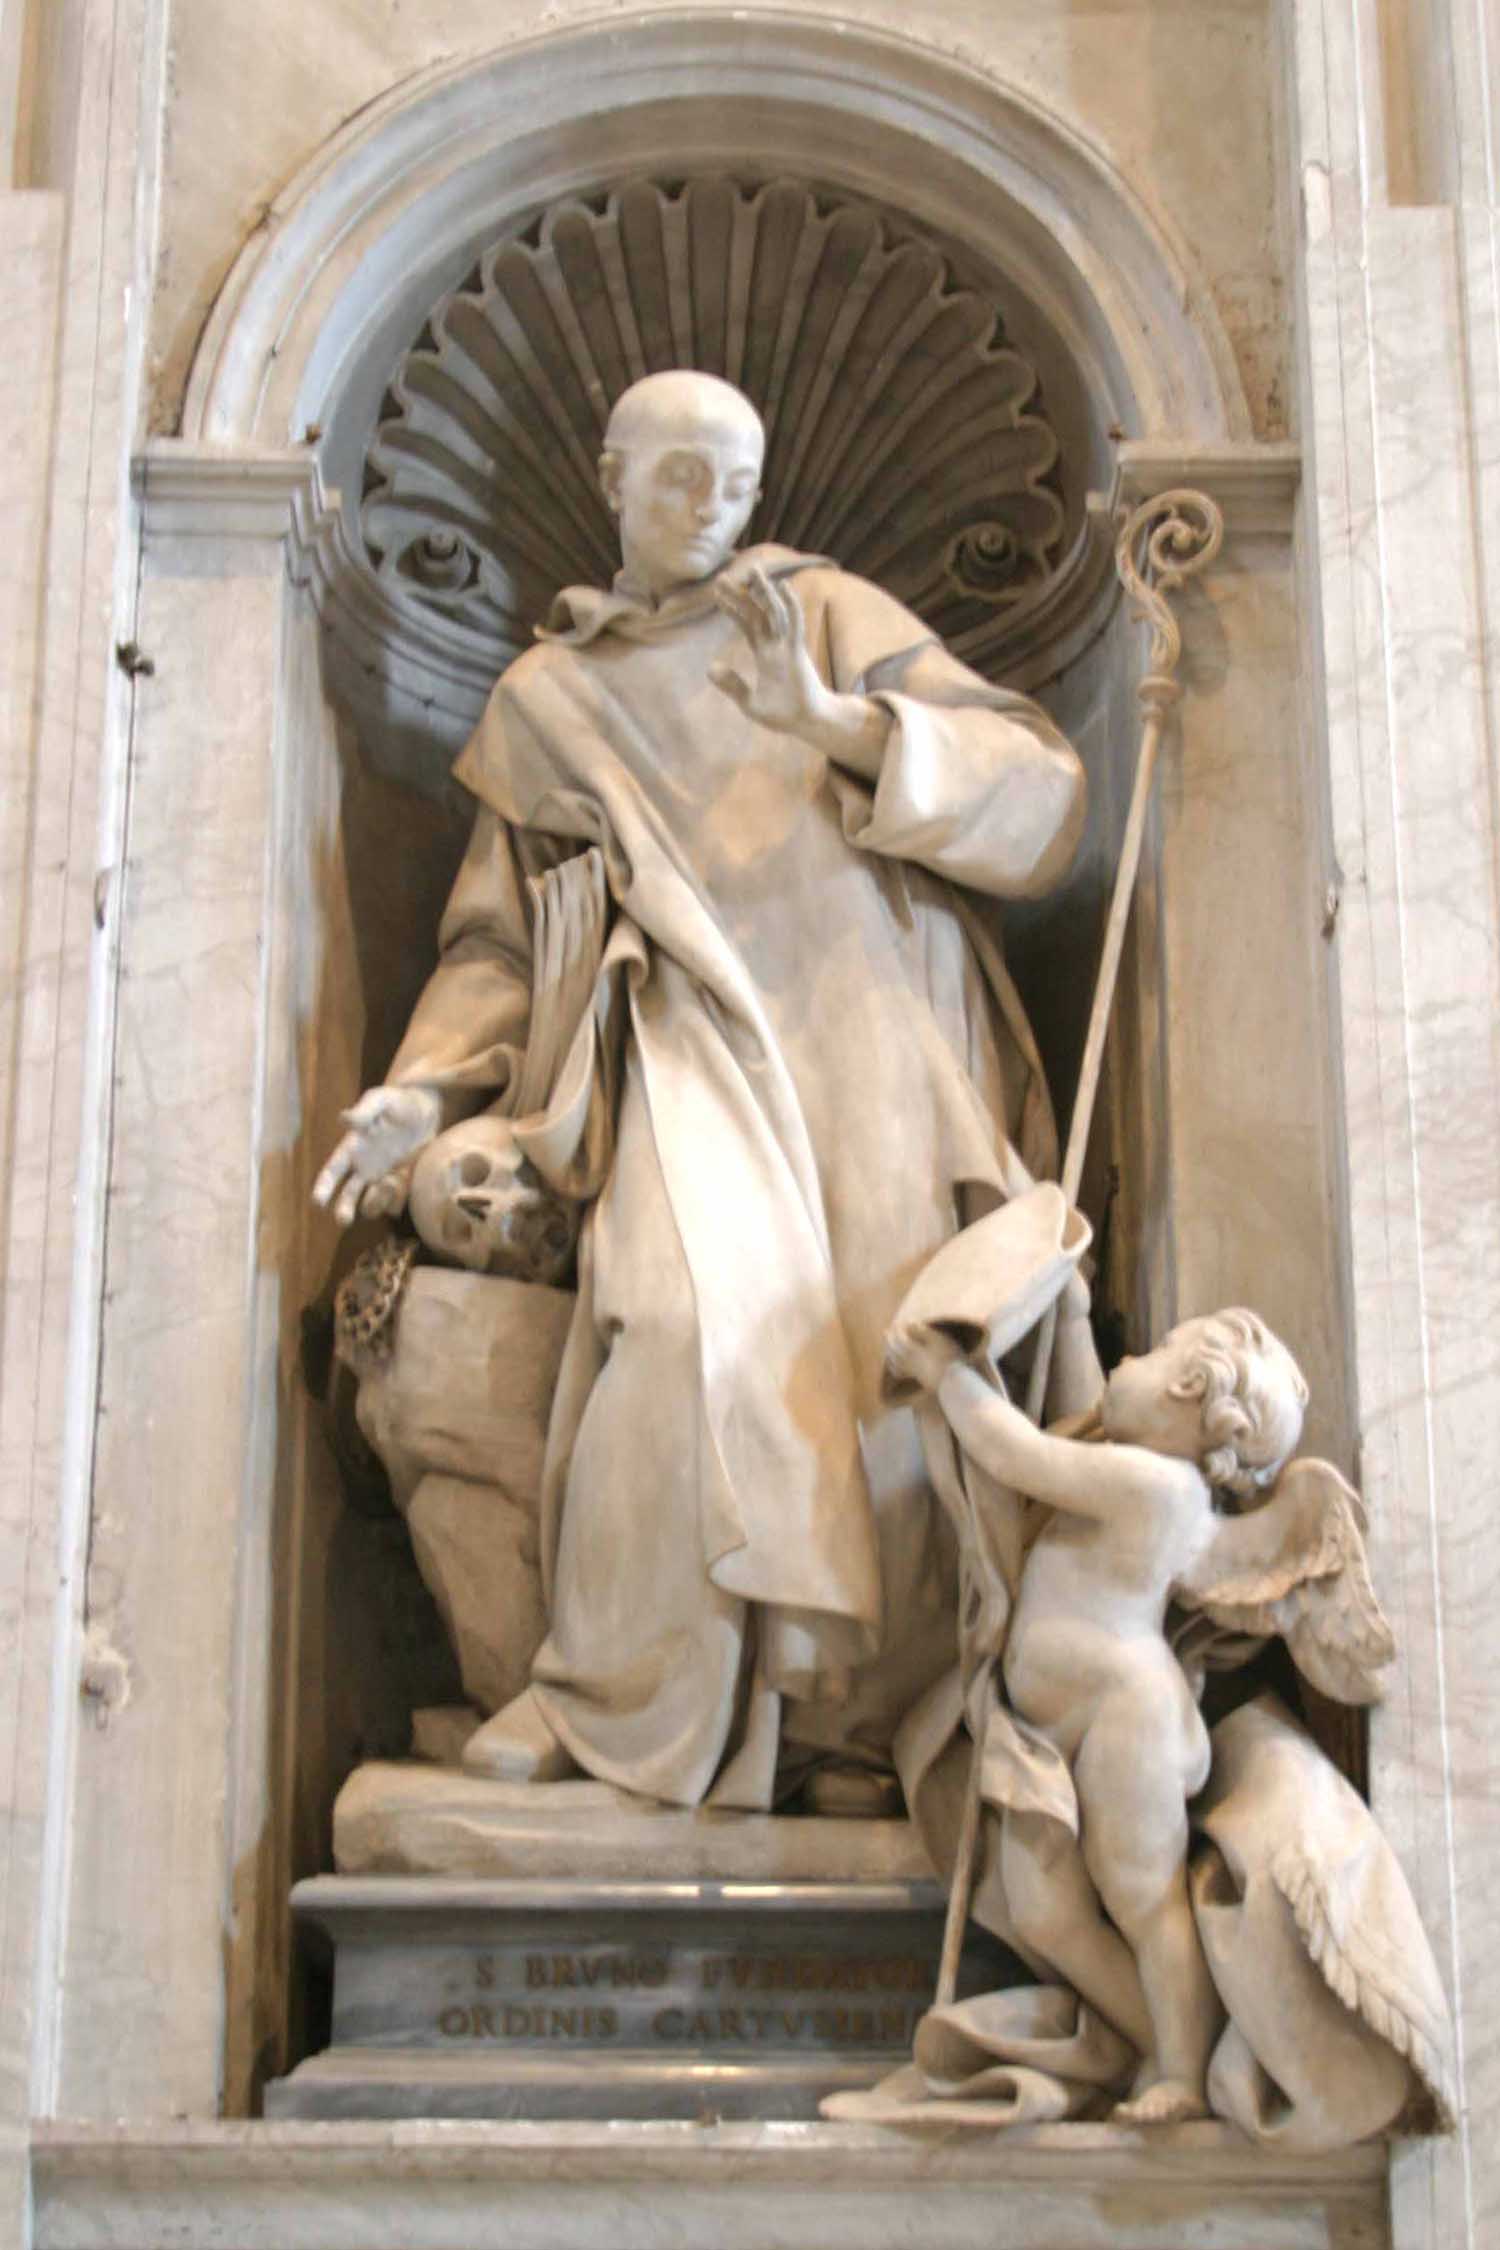 St. Bruno - Founder Statue